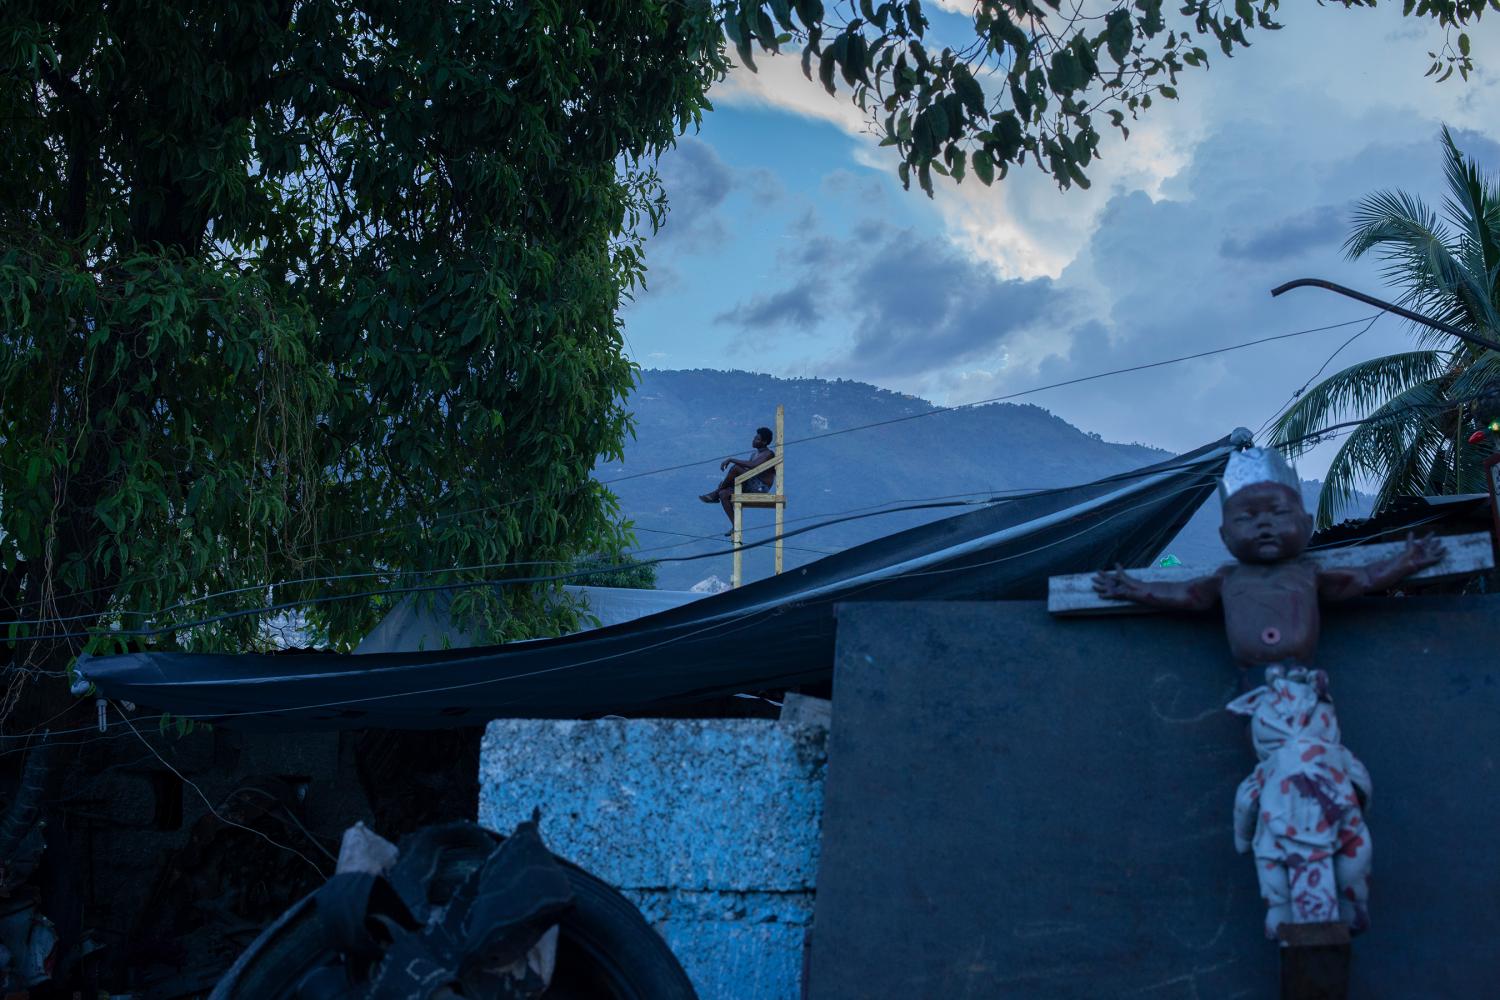 Atis Rezistans | Ghetto Biennale "The Big Chair" von Joe Winter, 3. Ghetto Bienale 2013, Port-au-Prince, Haiti